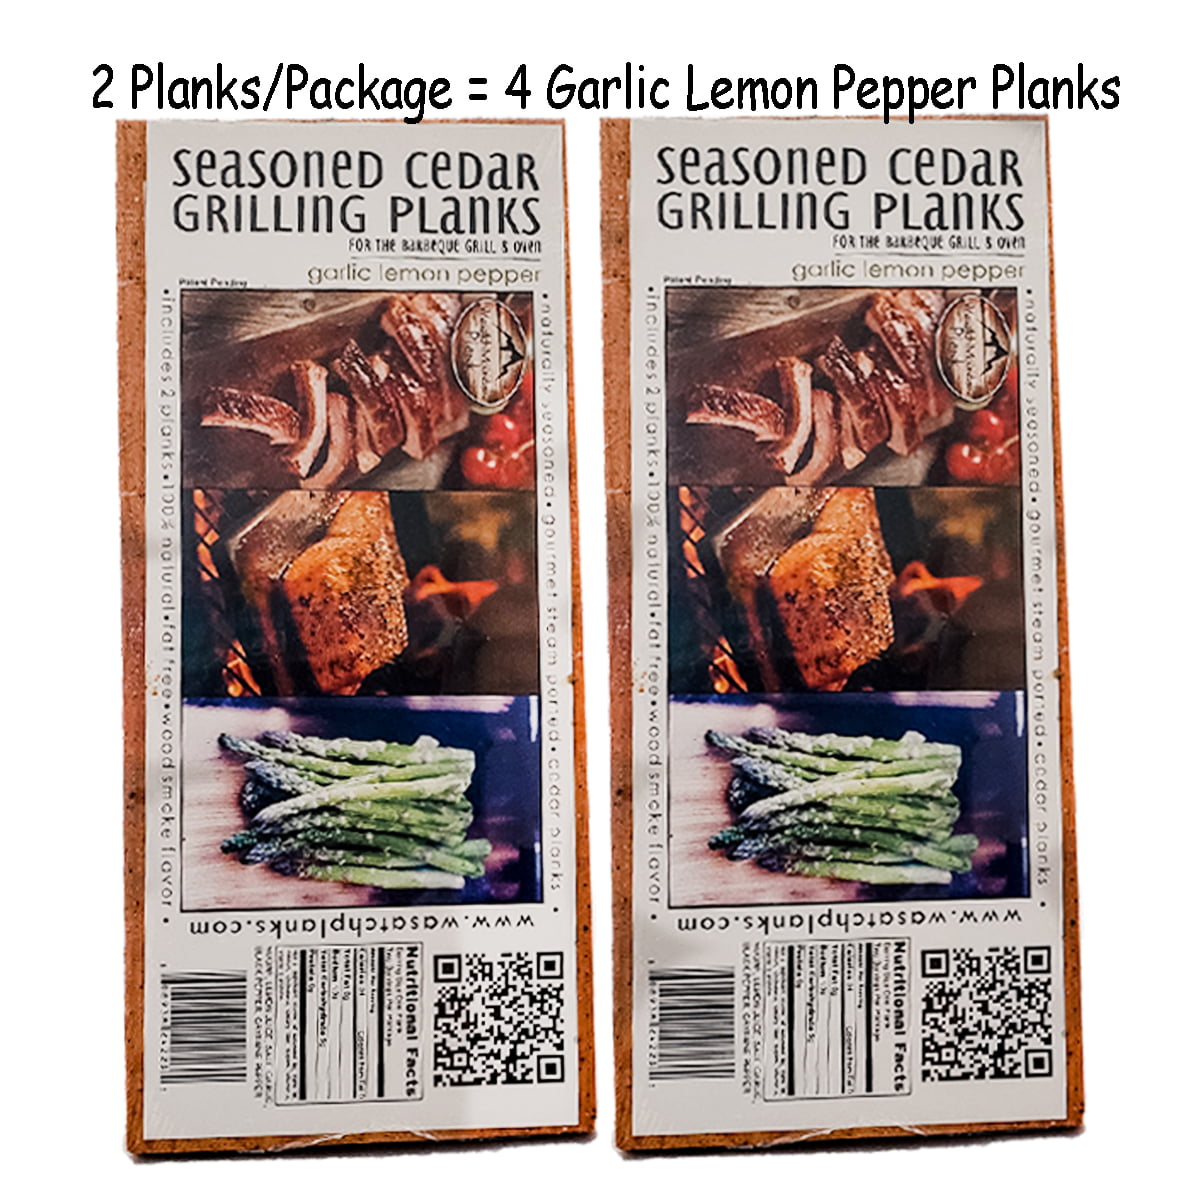 Details about   Wasatch Mountain Cedar Grilling Planks 4 Pack Teriyaki Sake Garlic Lemon Pepper 